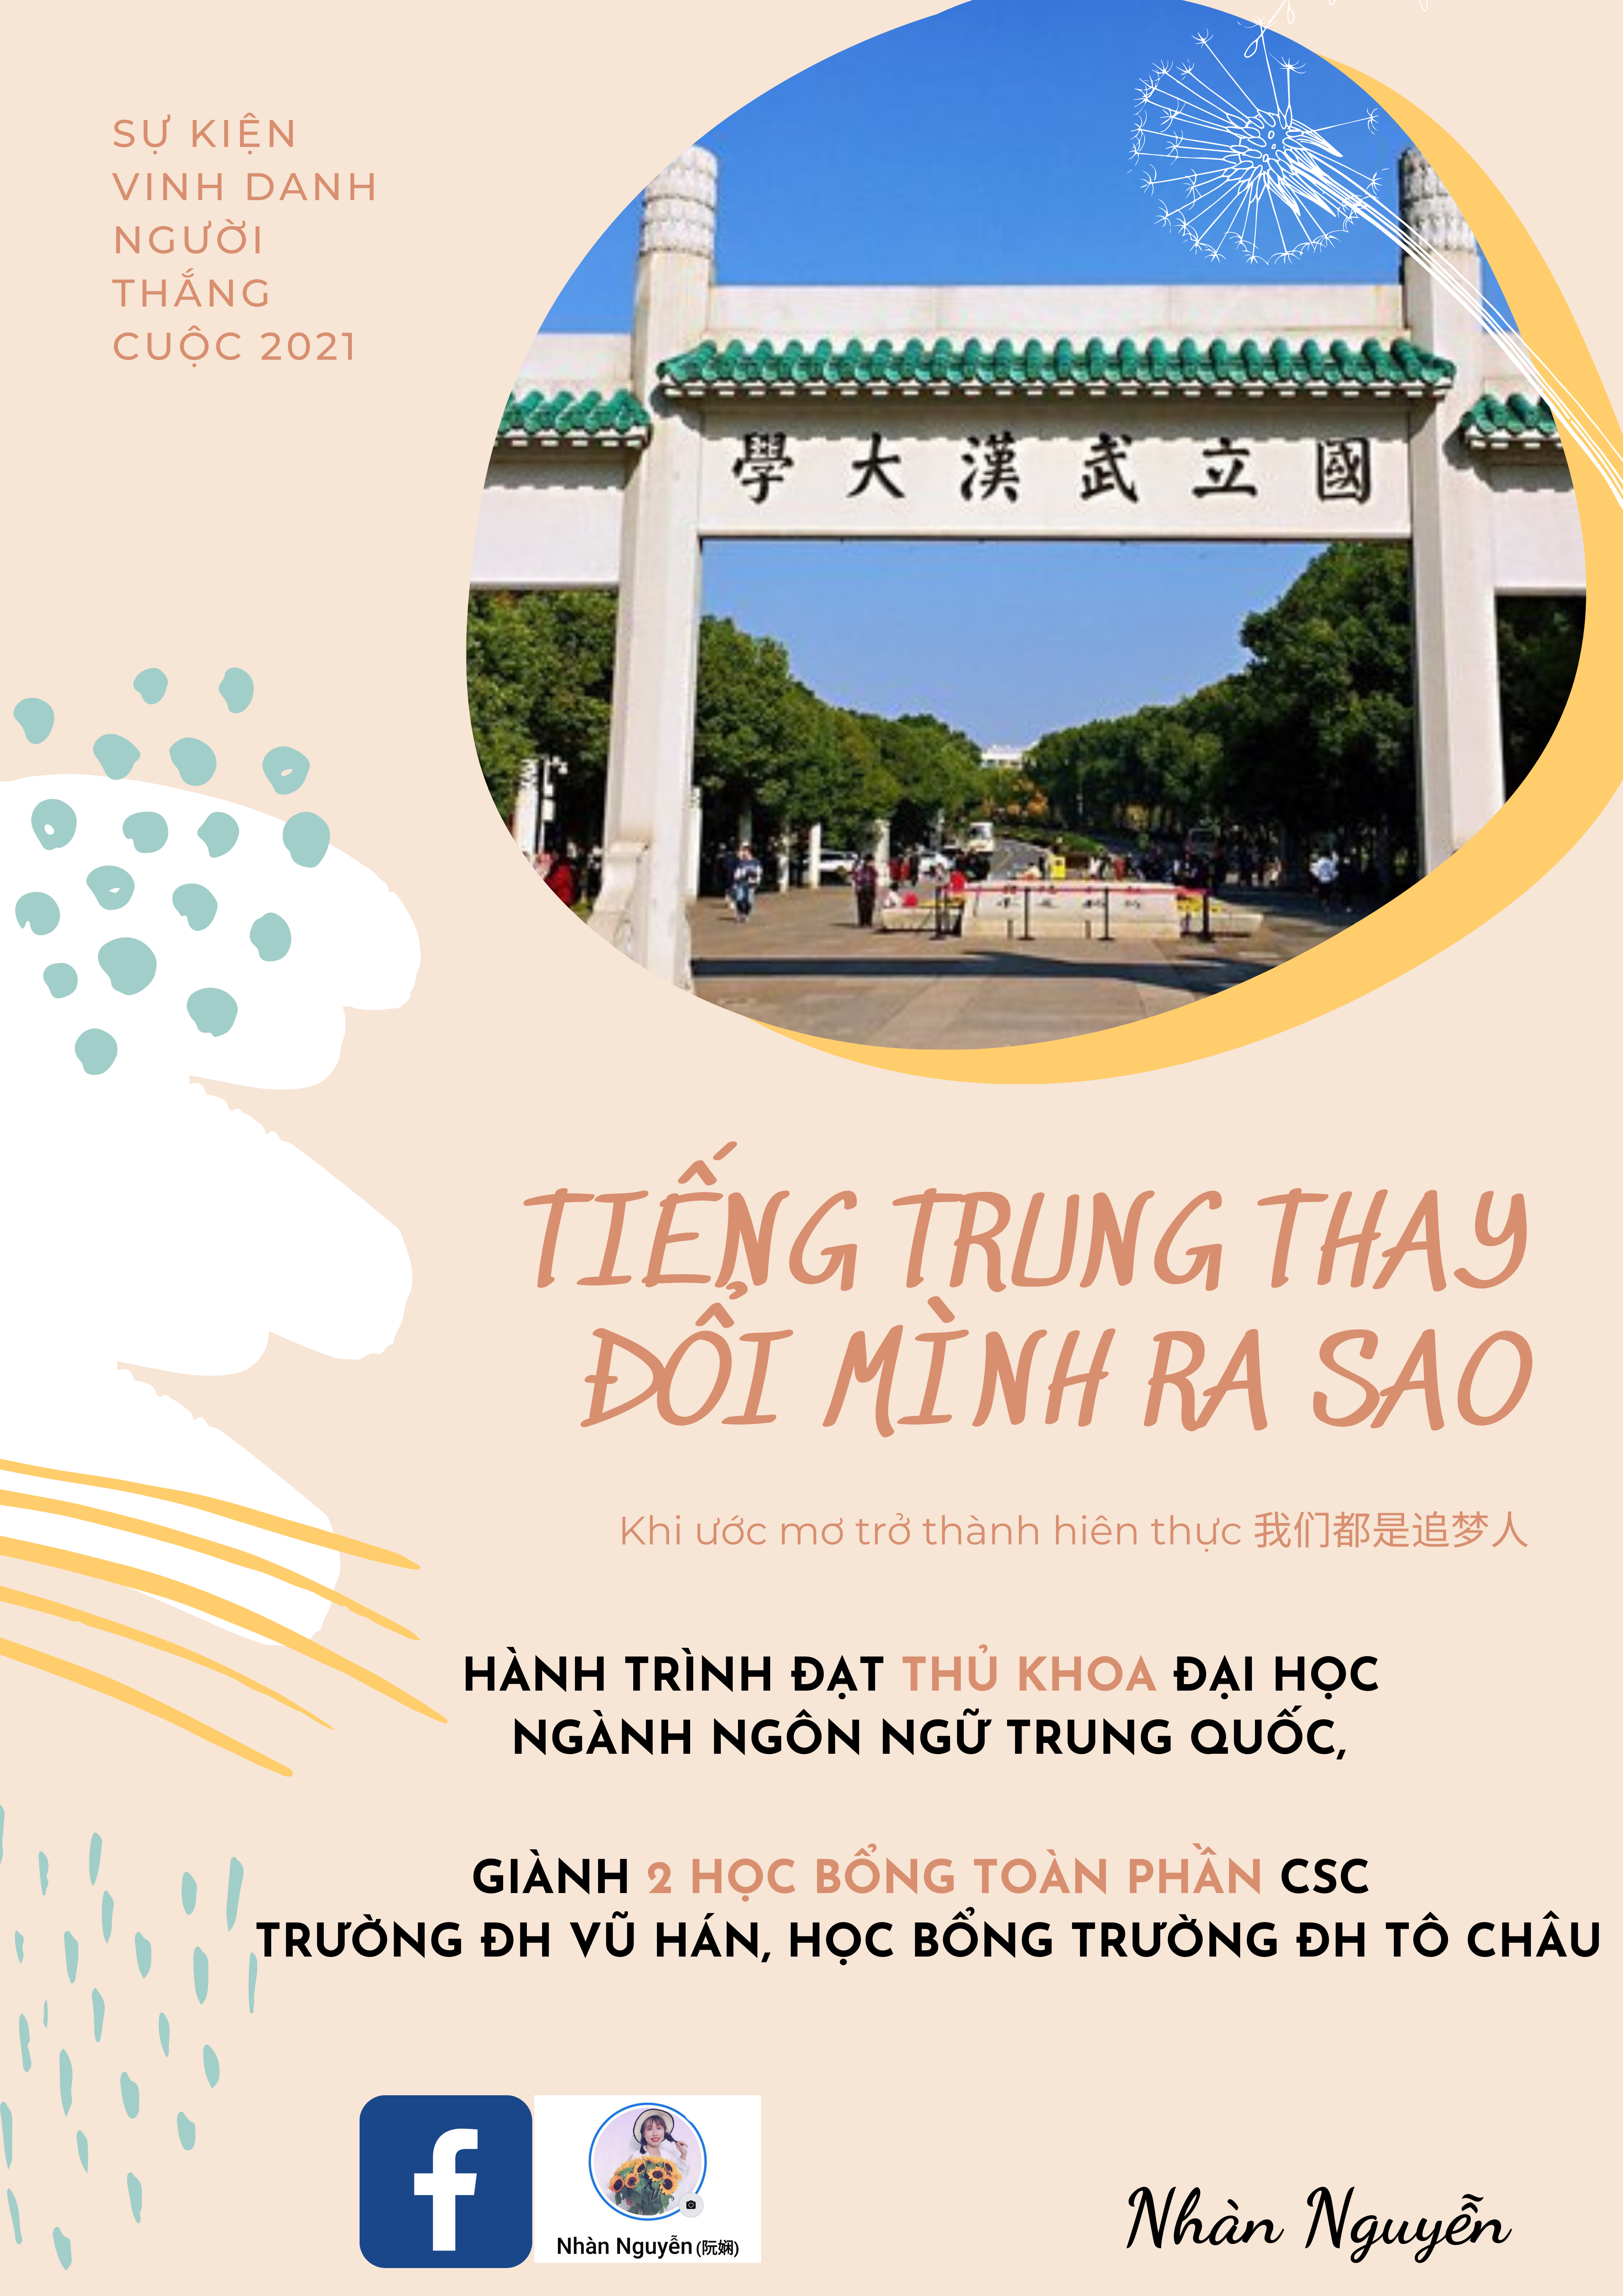 hanh-trinh-gianh-2-hoc-bong-toan-phan-csc-dai-hoc-vu-han-va-hoc-bong-truong-dai-hoc-to-chau